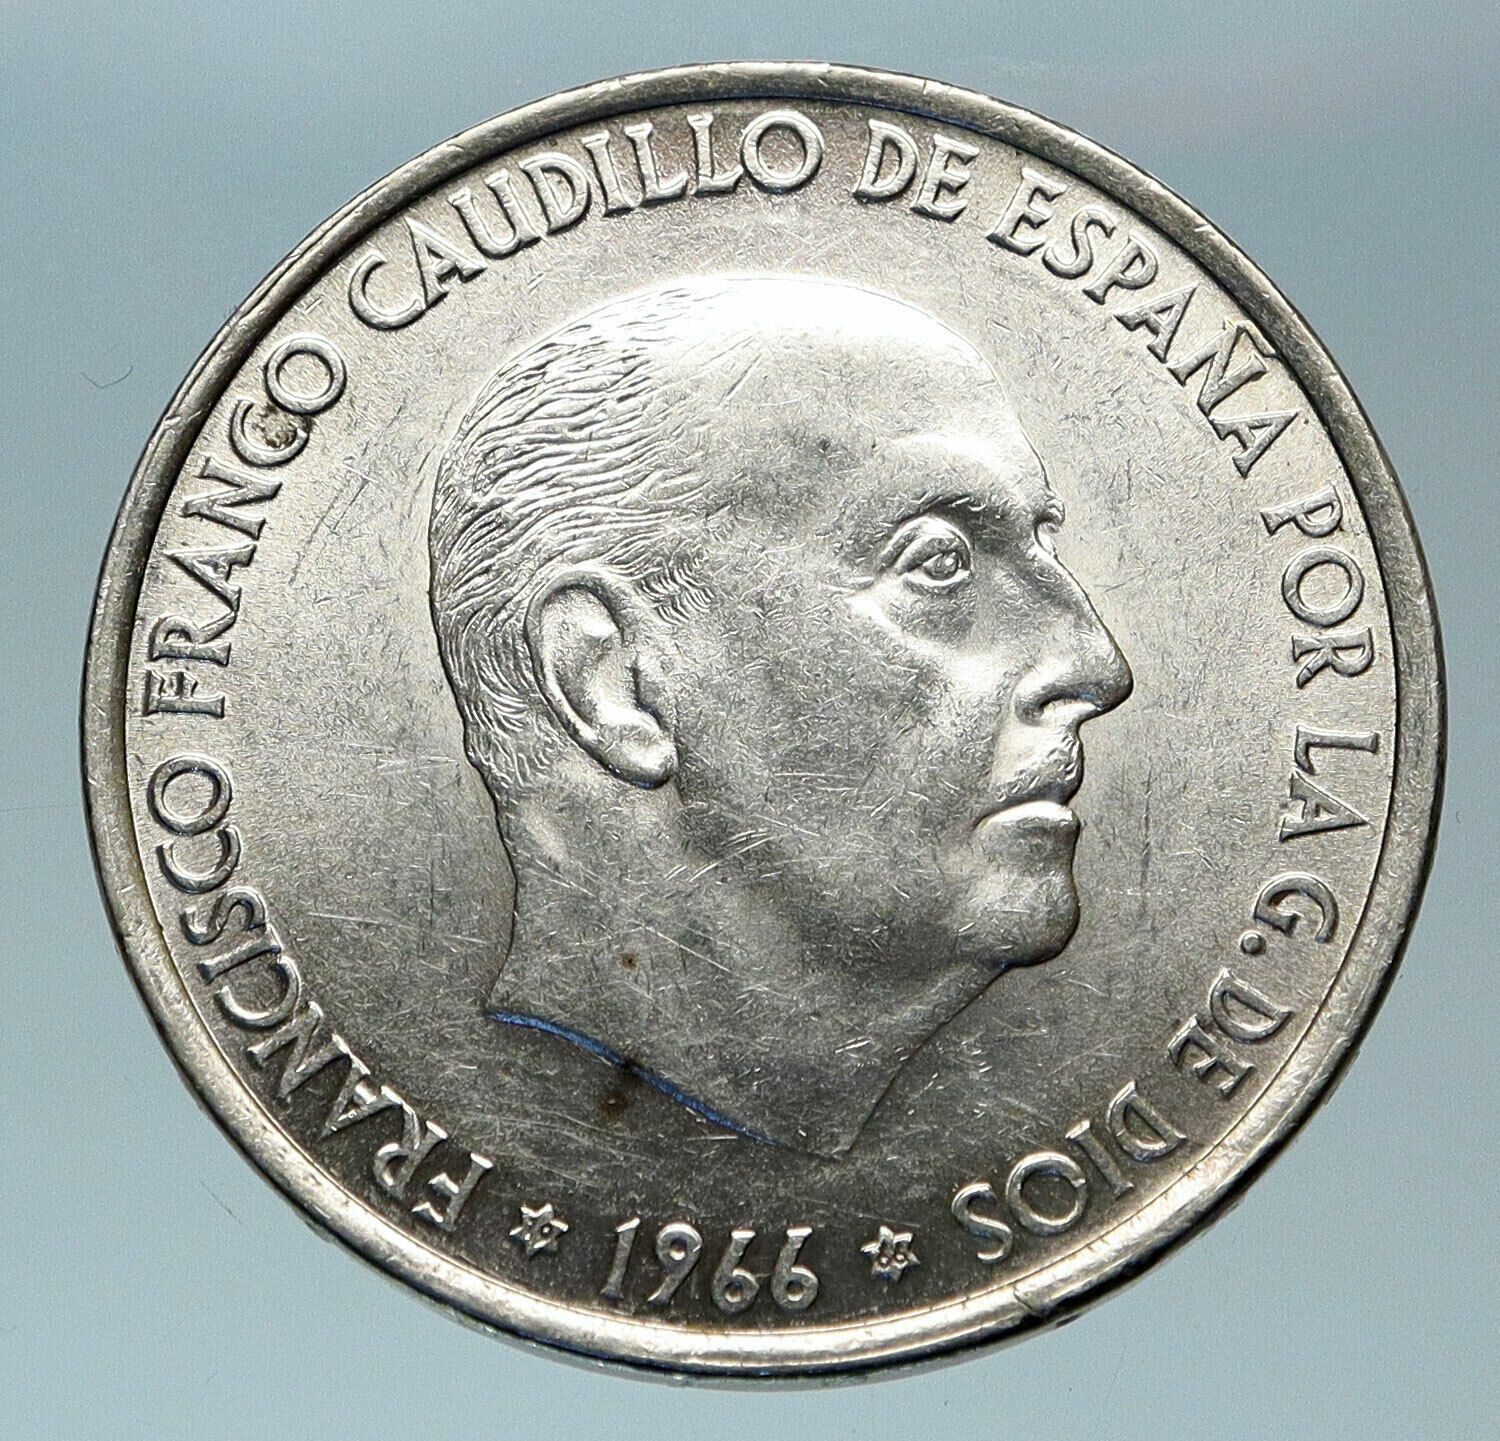 1966 SPAIN Large Franco Caudillo Genuine Silver 100 Pesetas Spanish Coin i84379